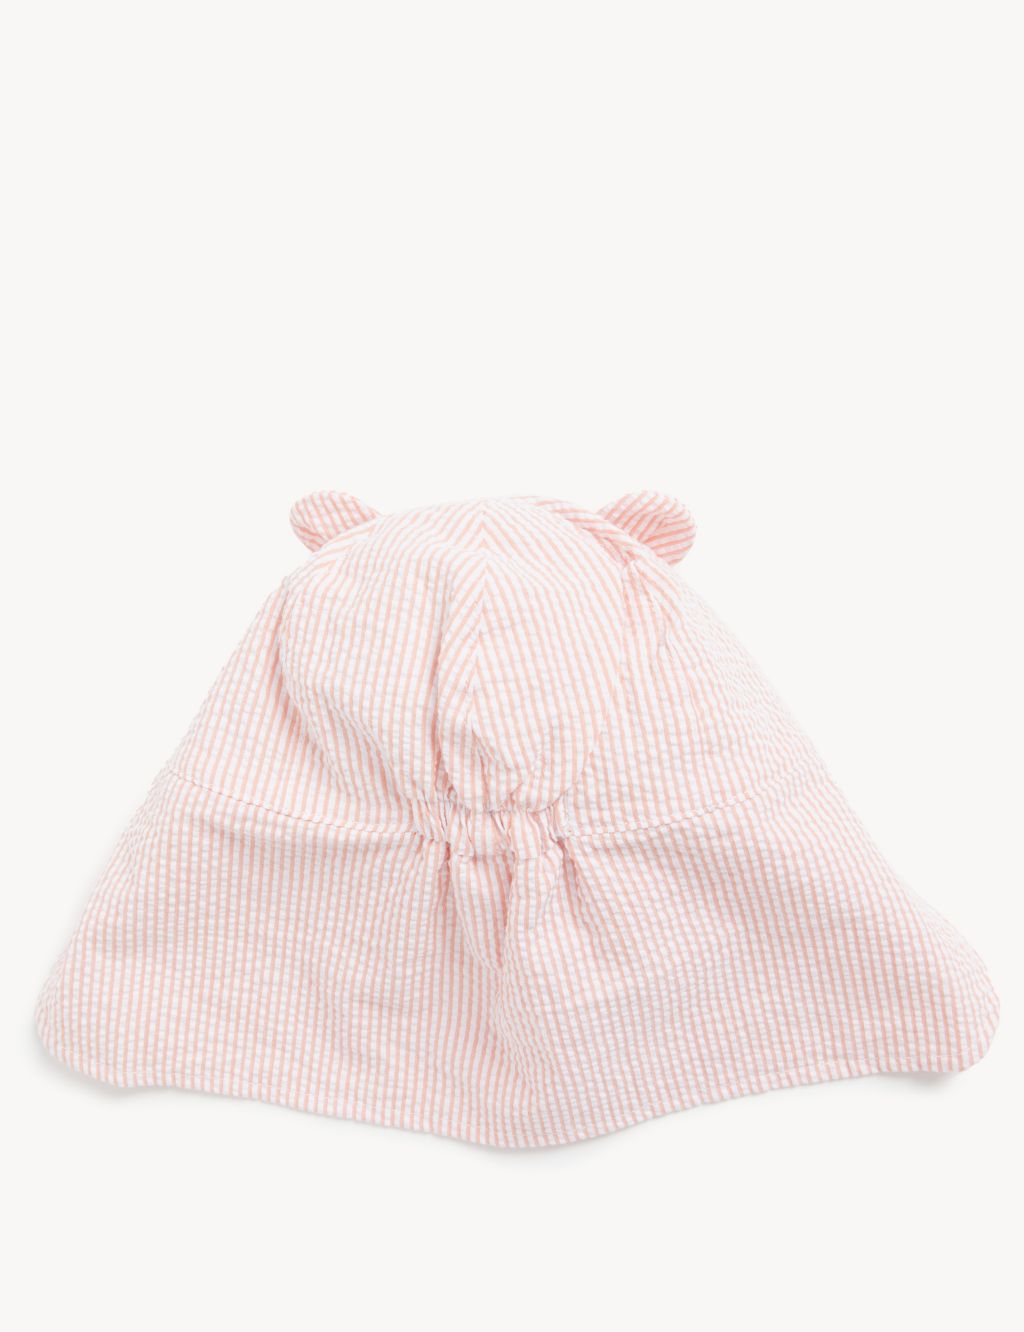 Kids' Pure Cotton Striped Sun Hat (0-6 Yrs) image 2